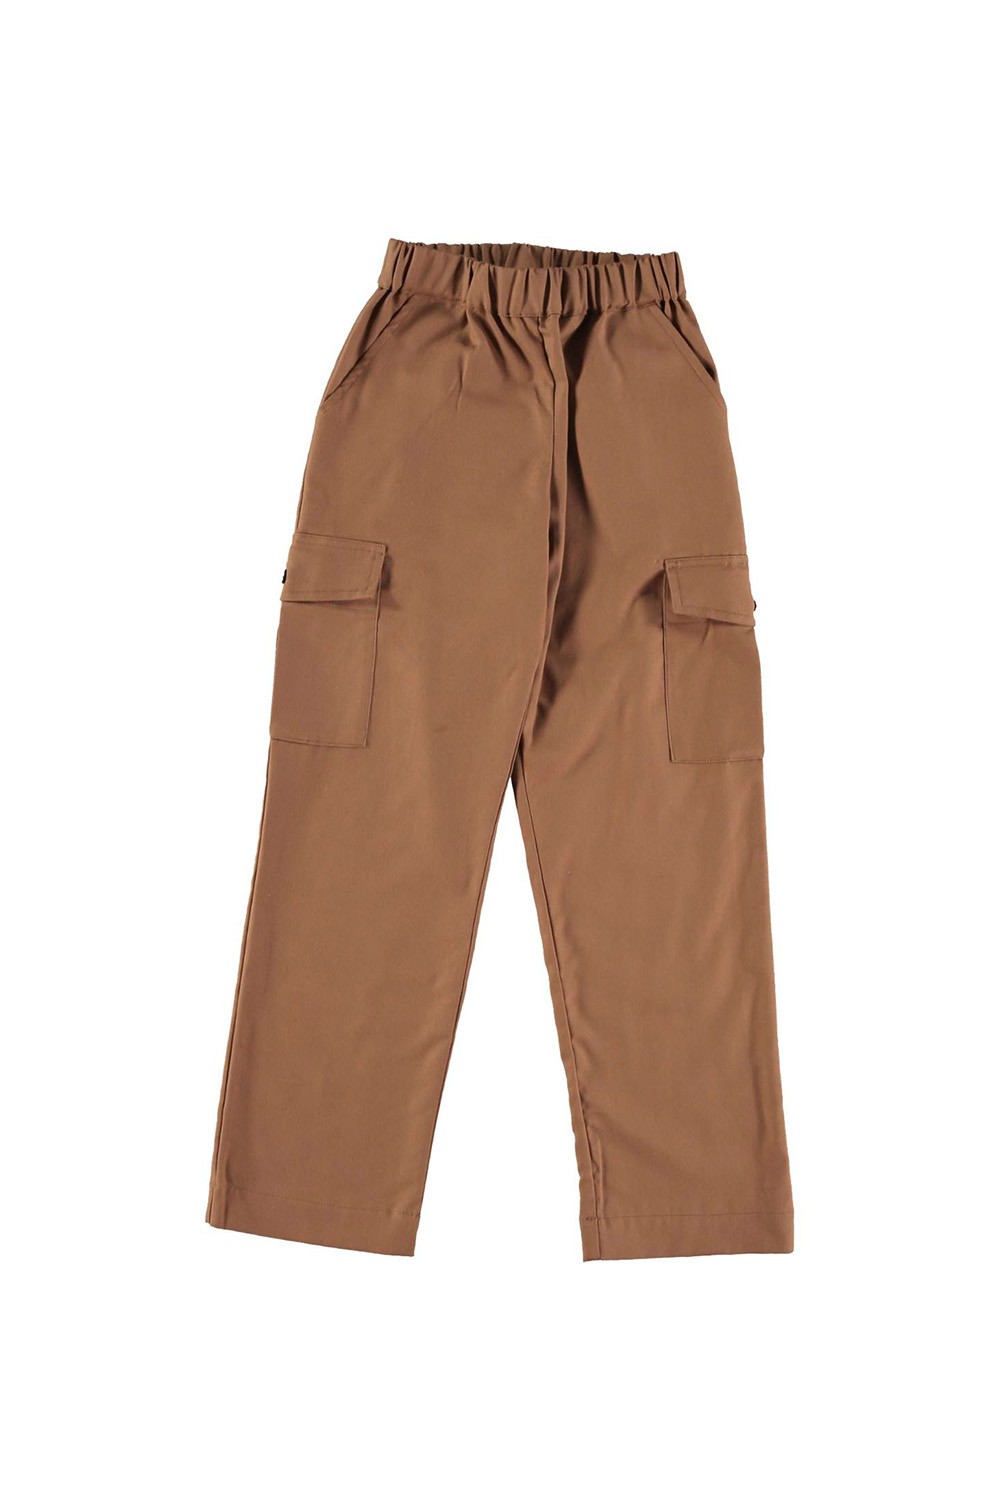 Baroudeur children's pants made of brown organic cotton